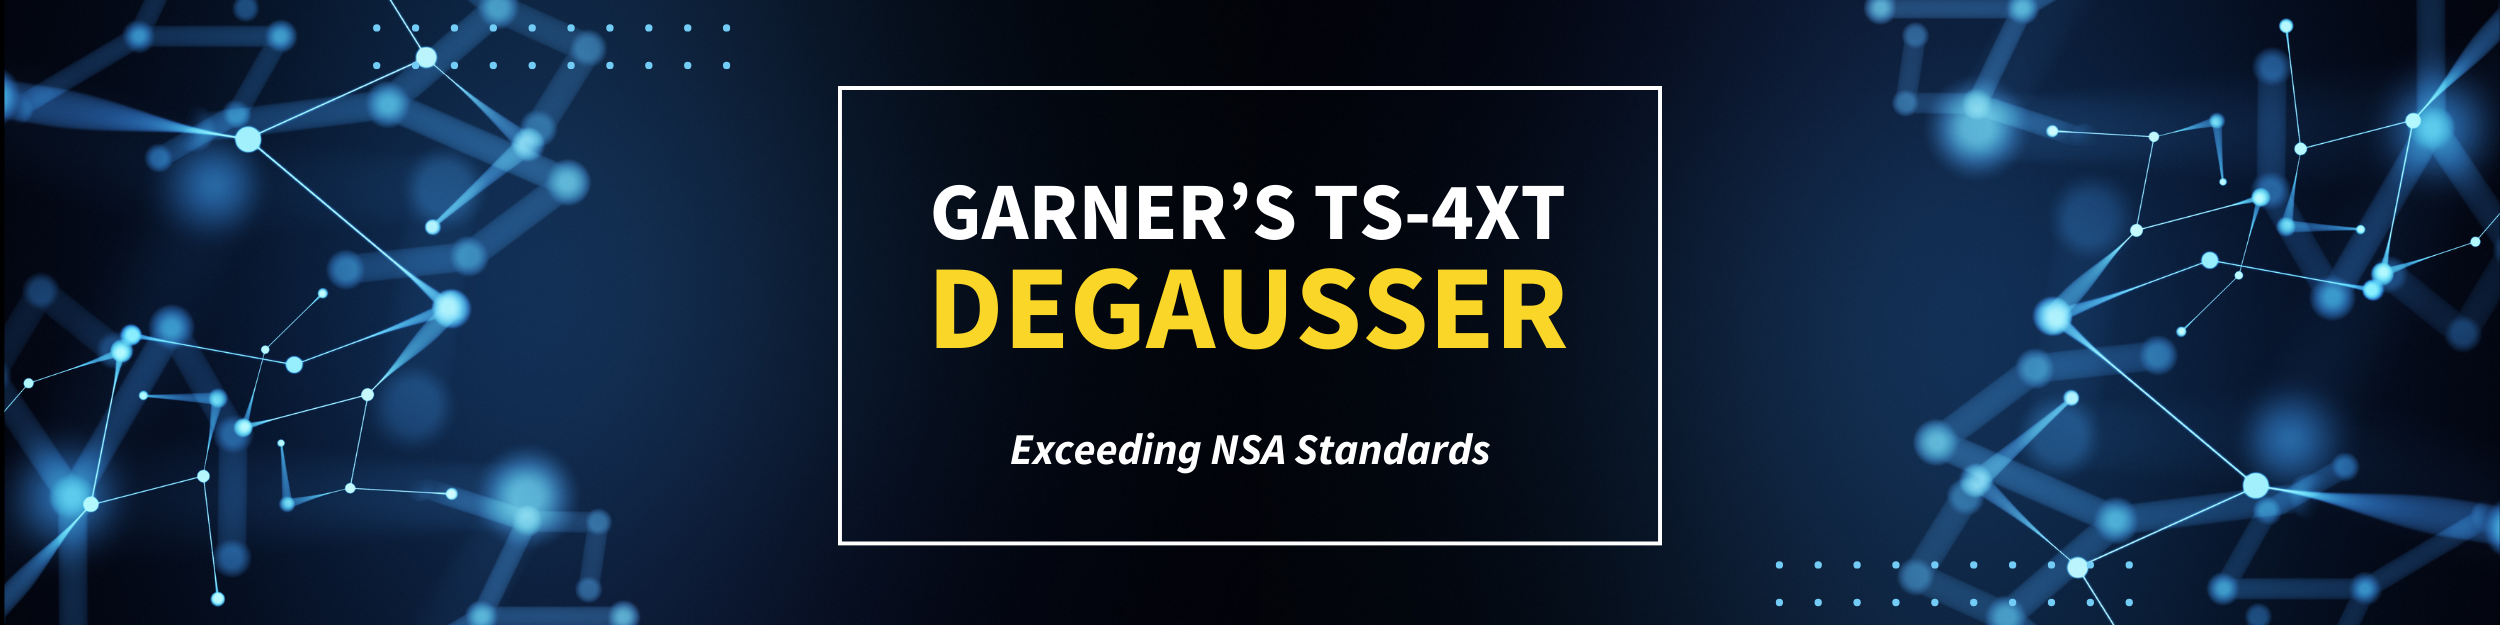 Garner's TS-4XT Degausser Exceeding NSA Standards